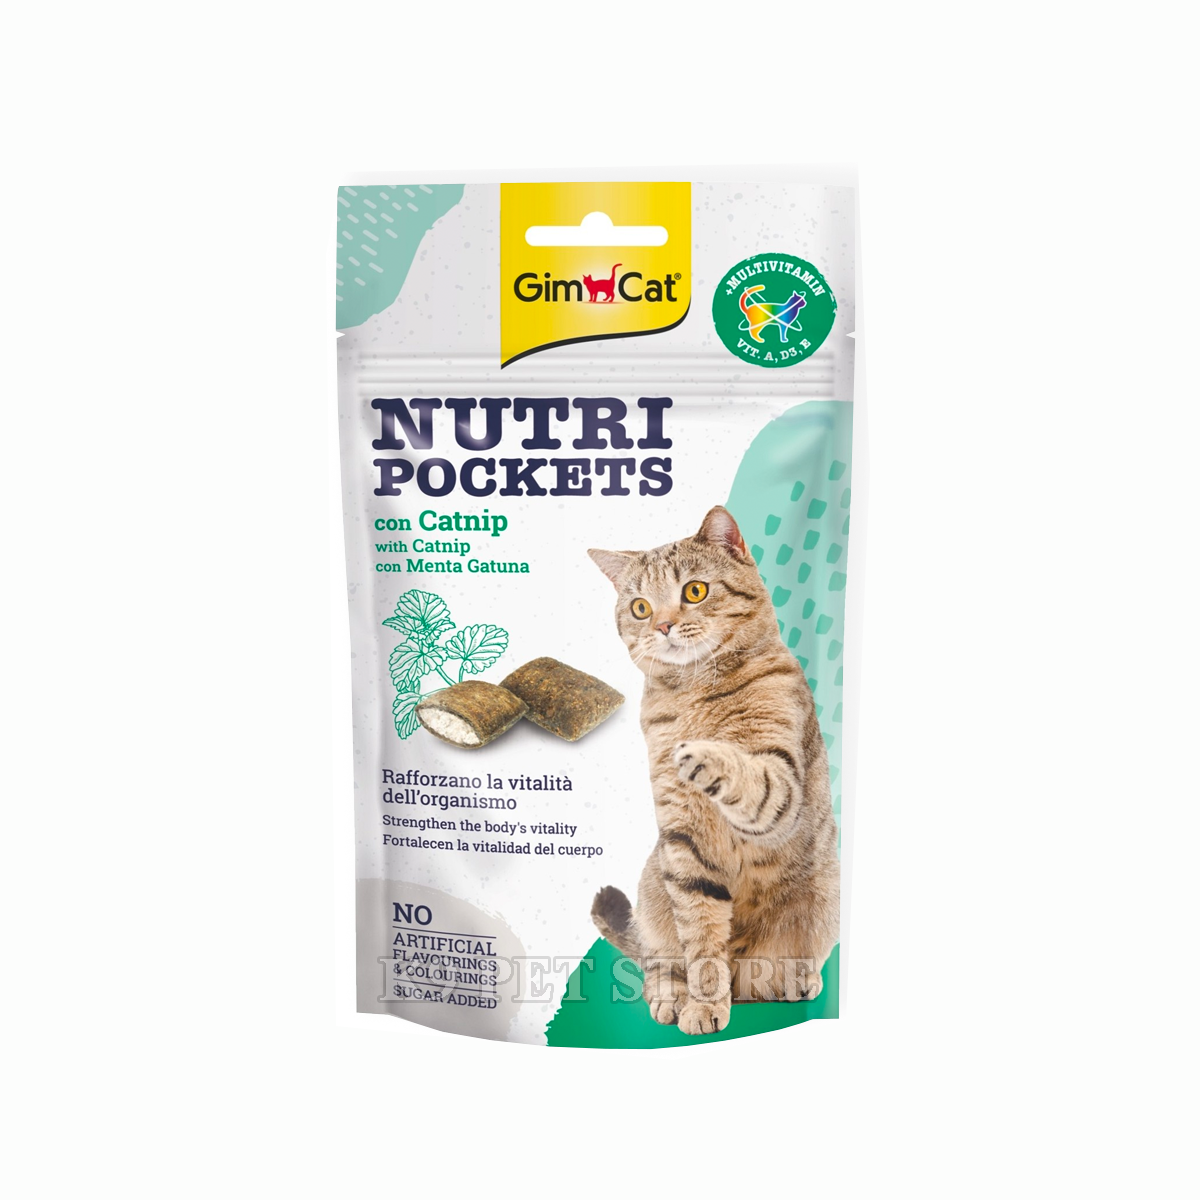 Snack mèo Gimcat Nutri Pockets Catnip & Multi Vitamin 60g - bổ sung Vitamin (vị cỏ mèo)